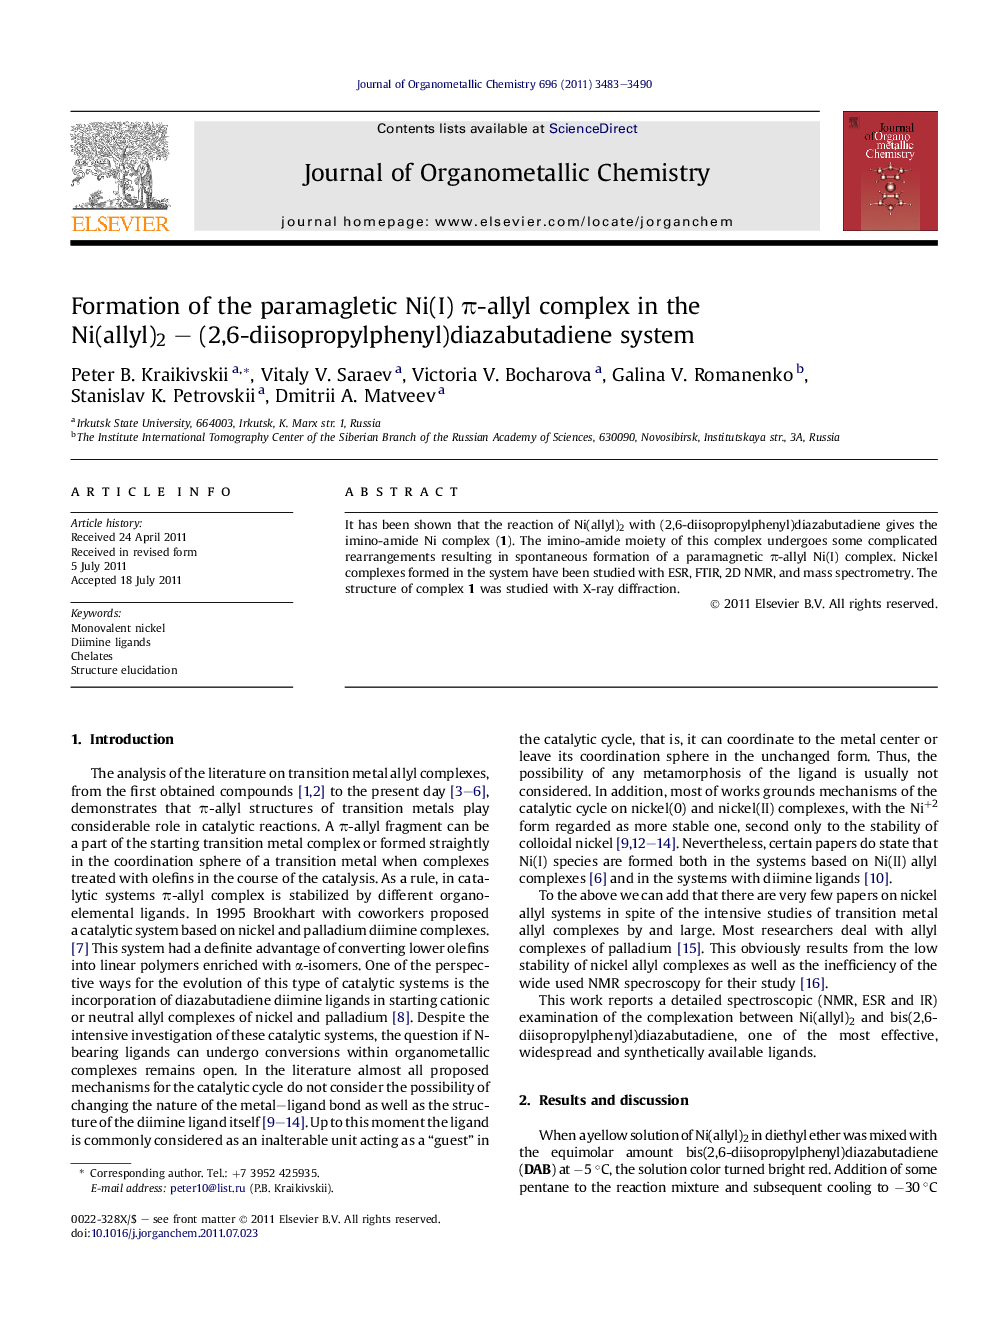 Formation of the paramagletic Ni(I) π-allyl complex in the Ni(allyl)2 – (2,6-diisopropylphenyl)diazabutadiene system